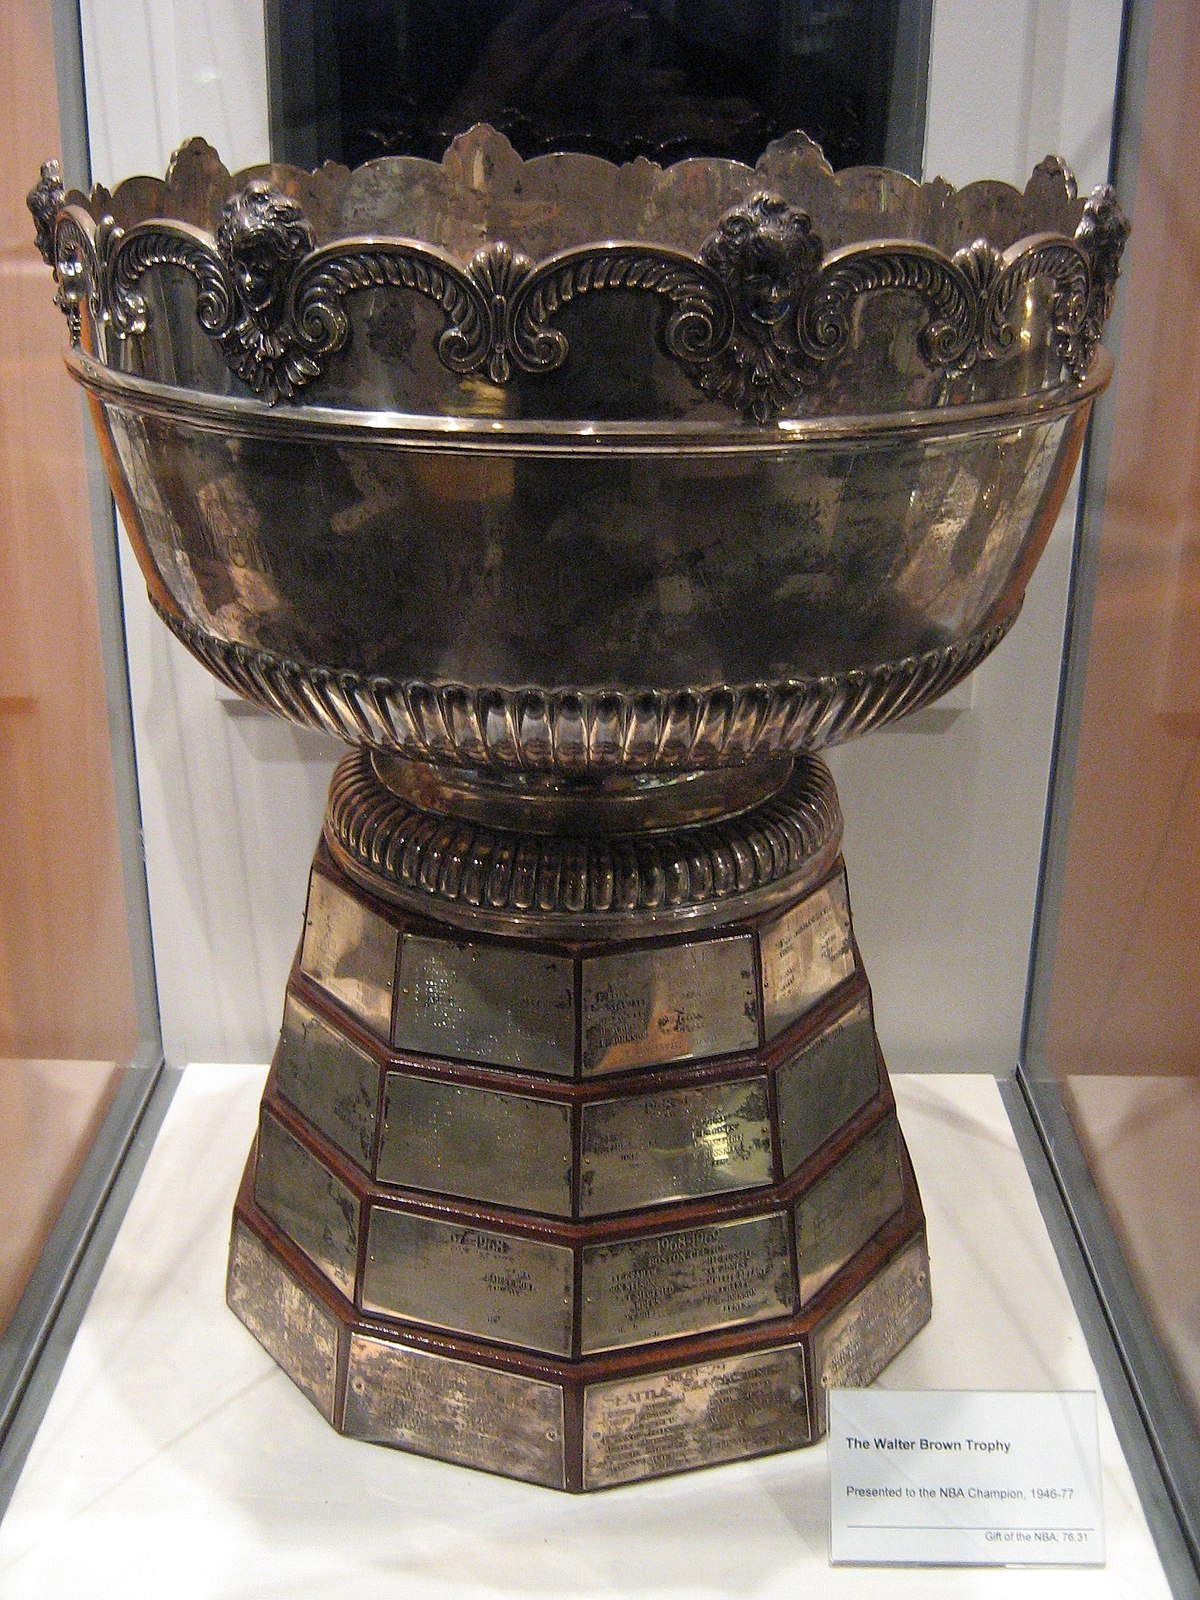 Larry O'Brien Championship Trophy - Wikipedia